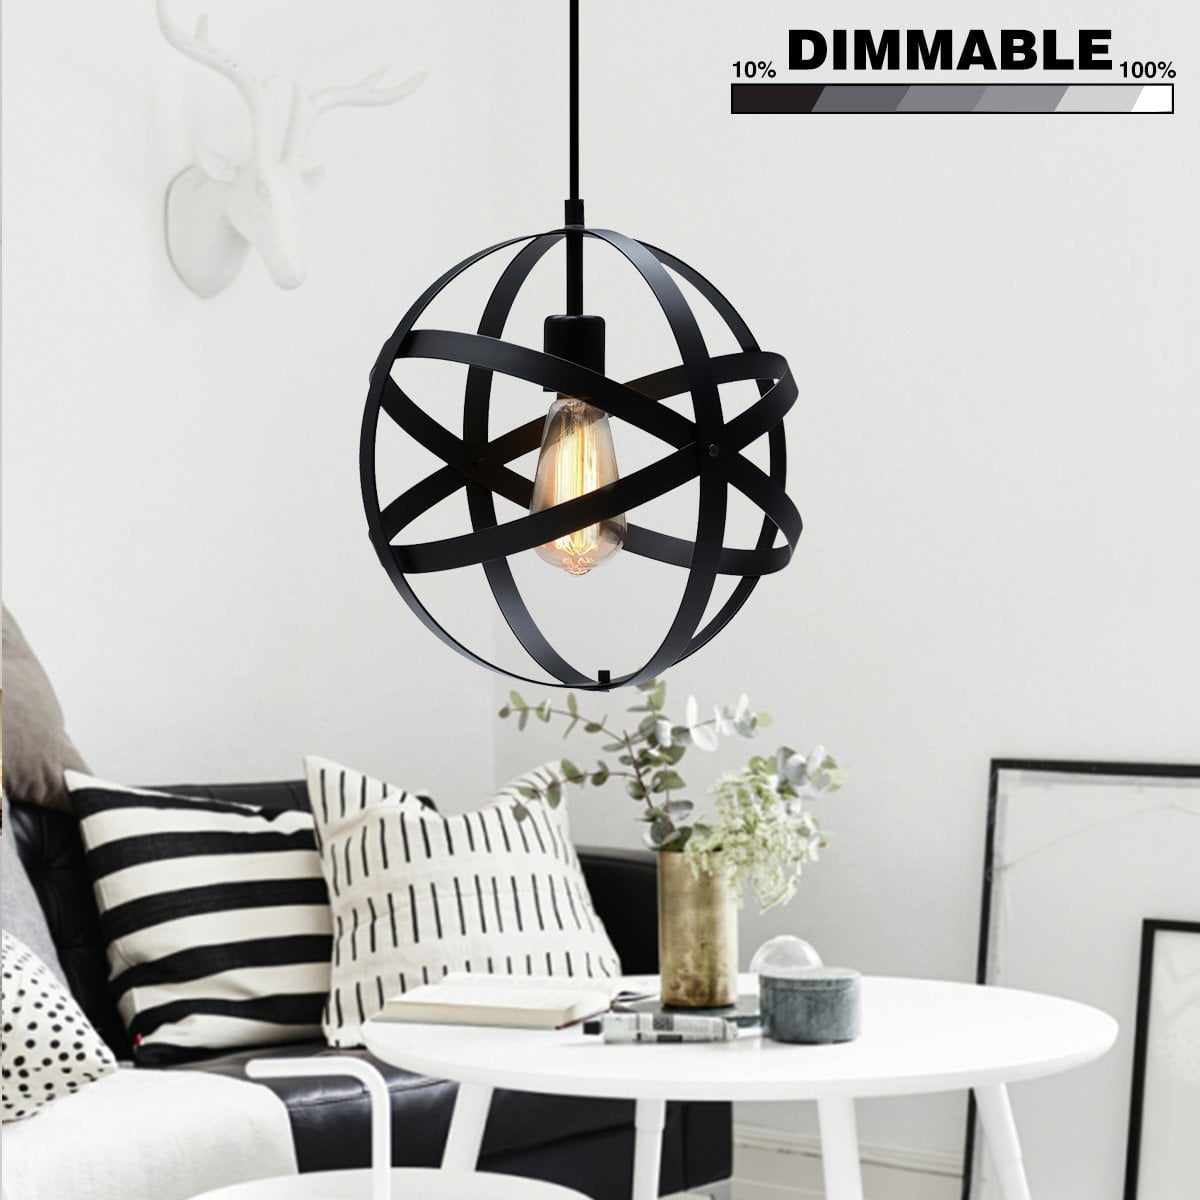 black Chandeliers lamp dining Living Room Indoor wrought iron pendant lights